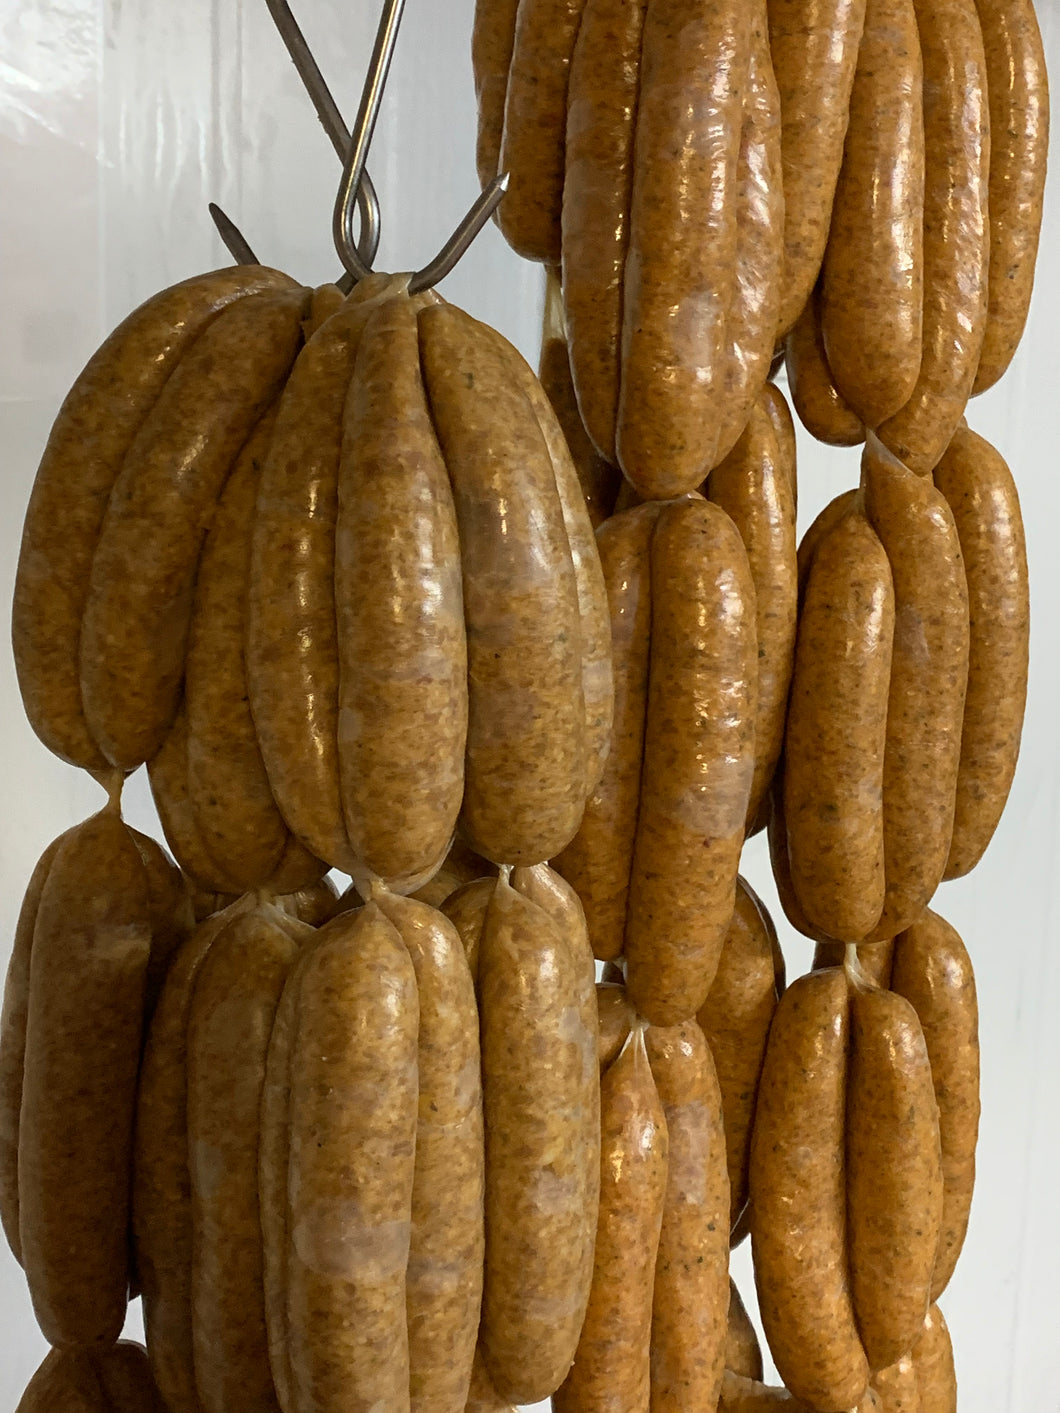 BBQ sausages 1kg packs - 9 varieties available!